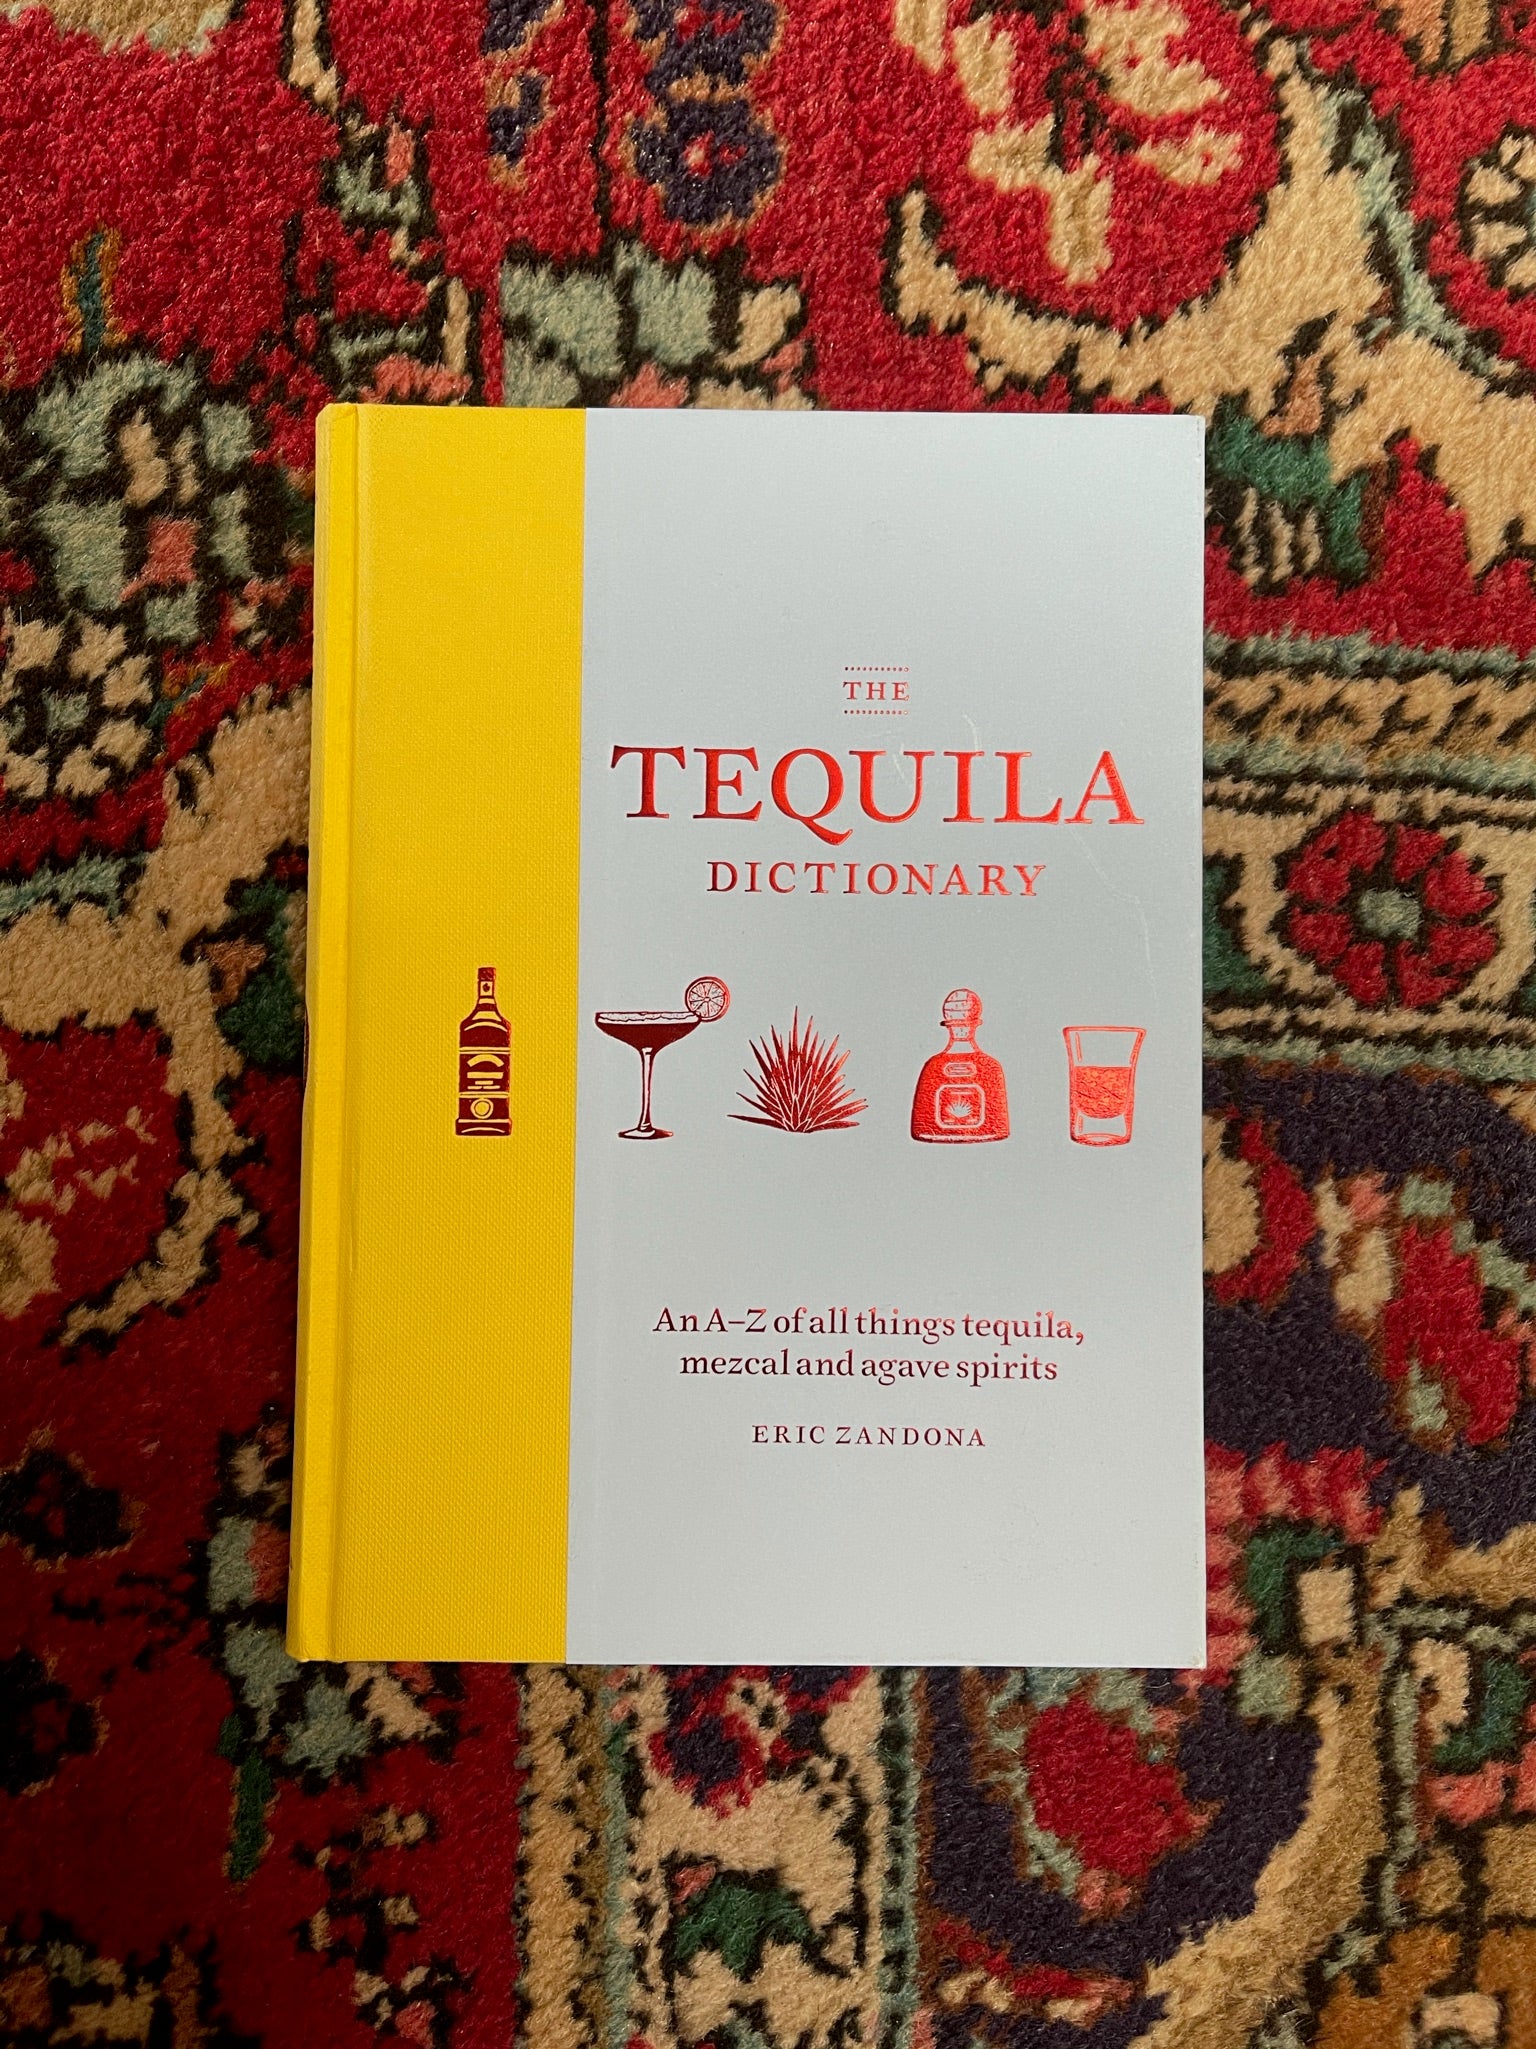 The Tequila Dictionary by Eric Zandona